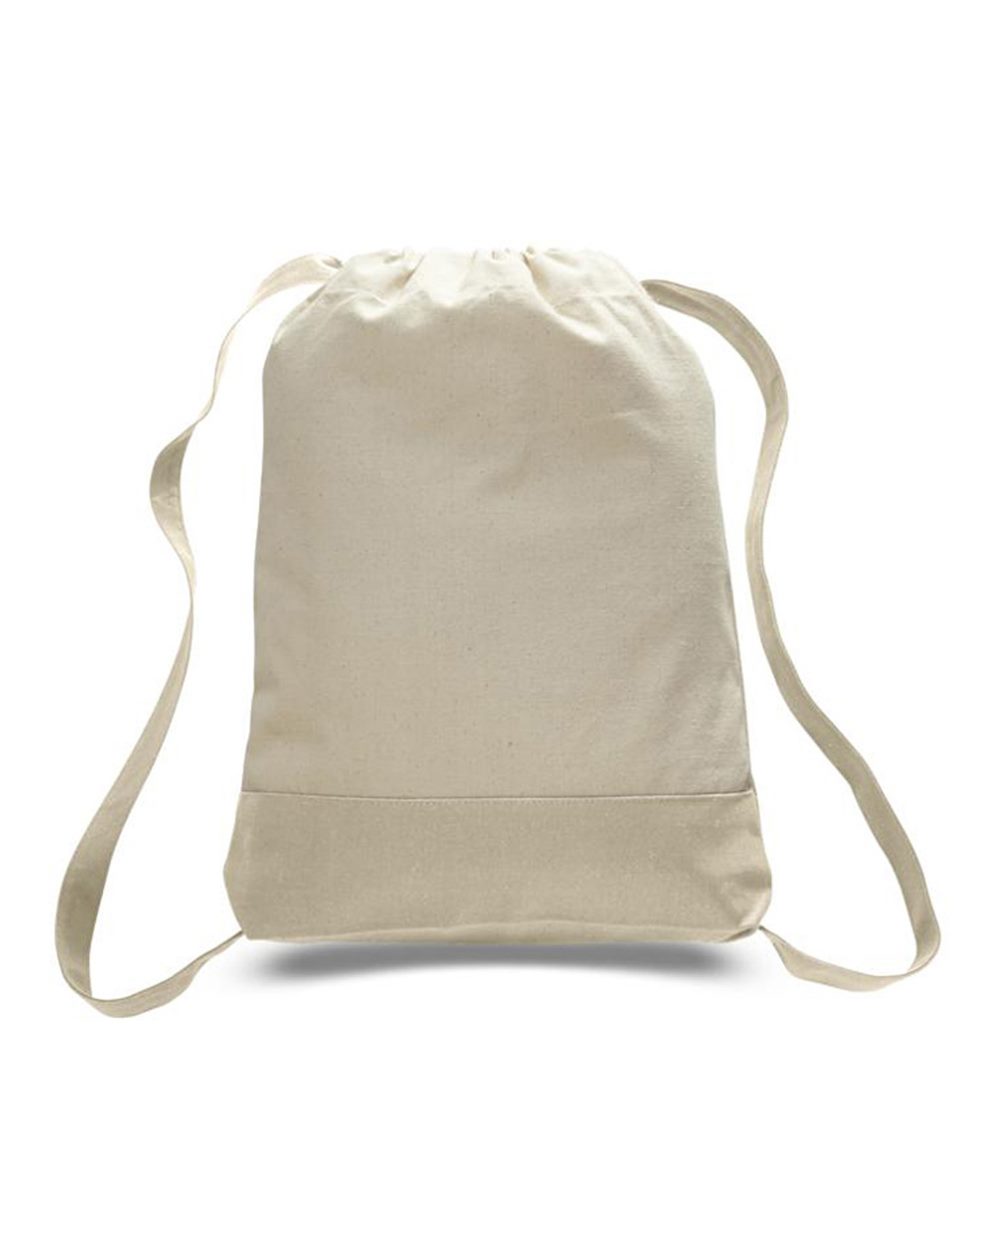 Q-Tees Q125700 - Canvas Sport Backpack $3.23 - Bags